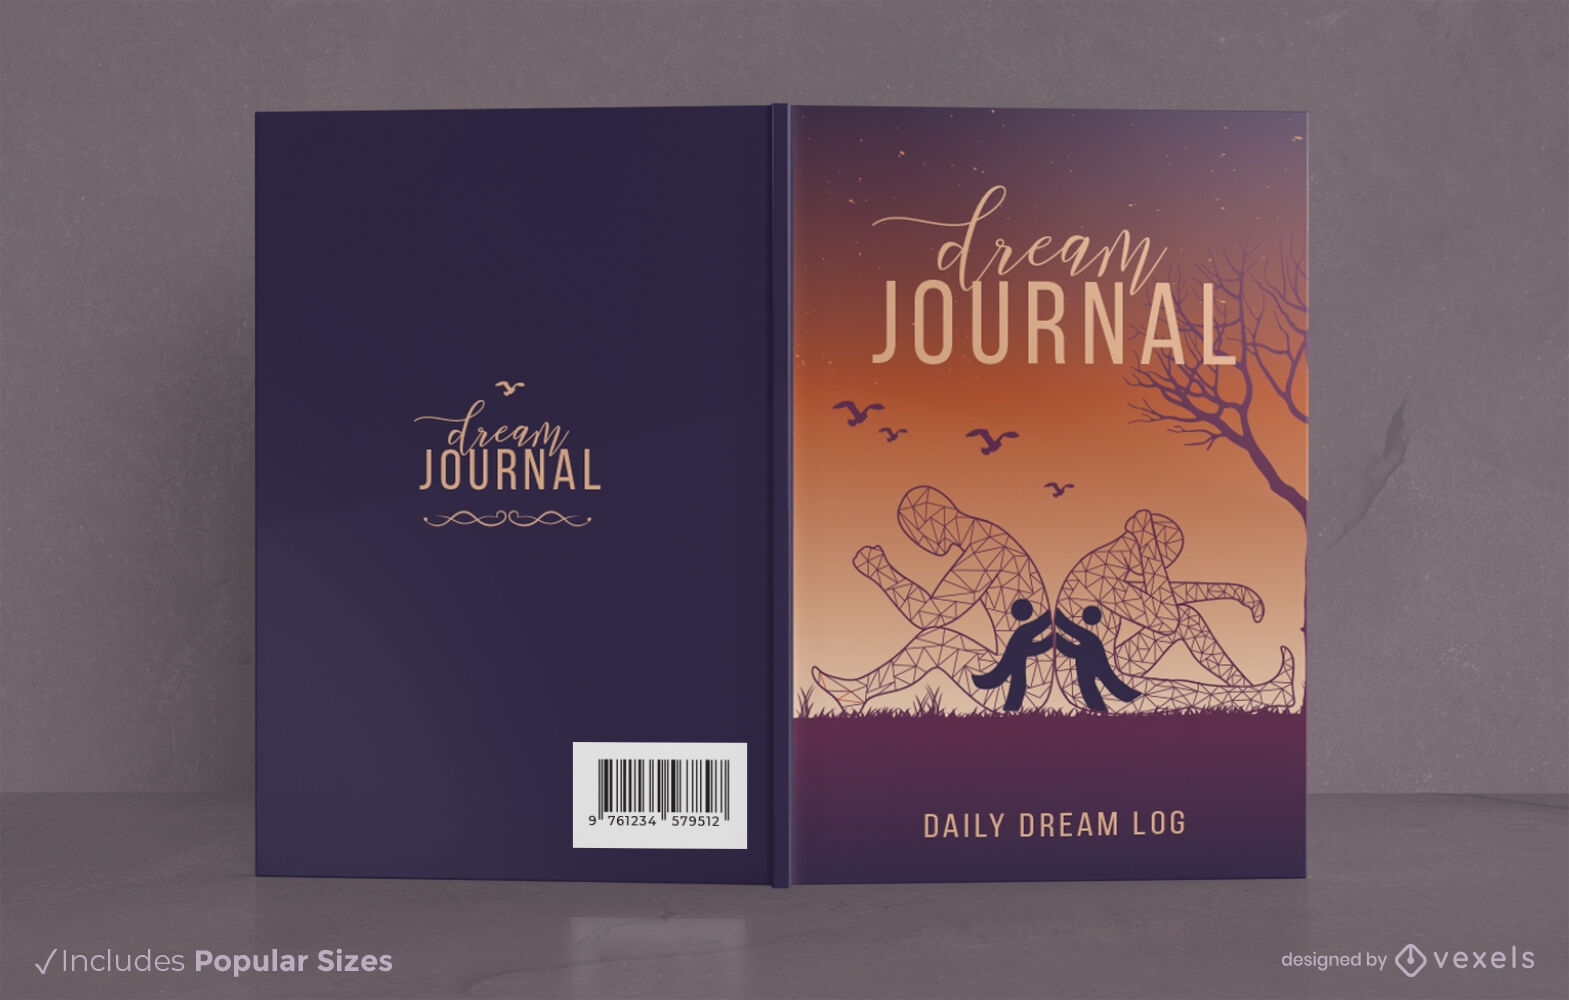 Dream journal kids book cover design